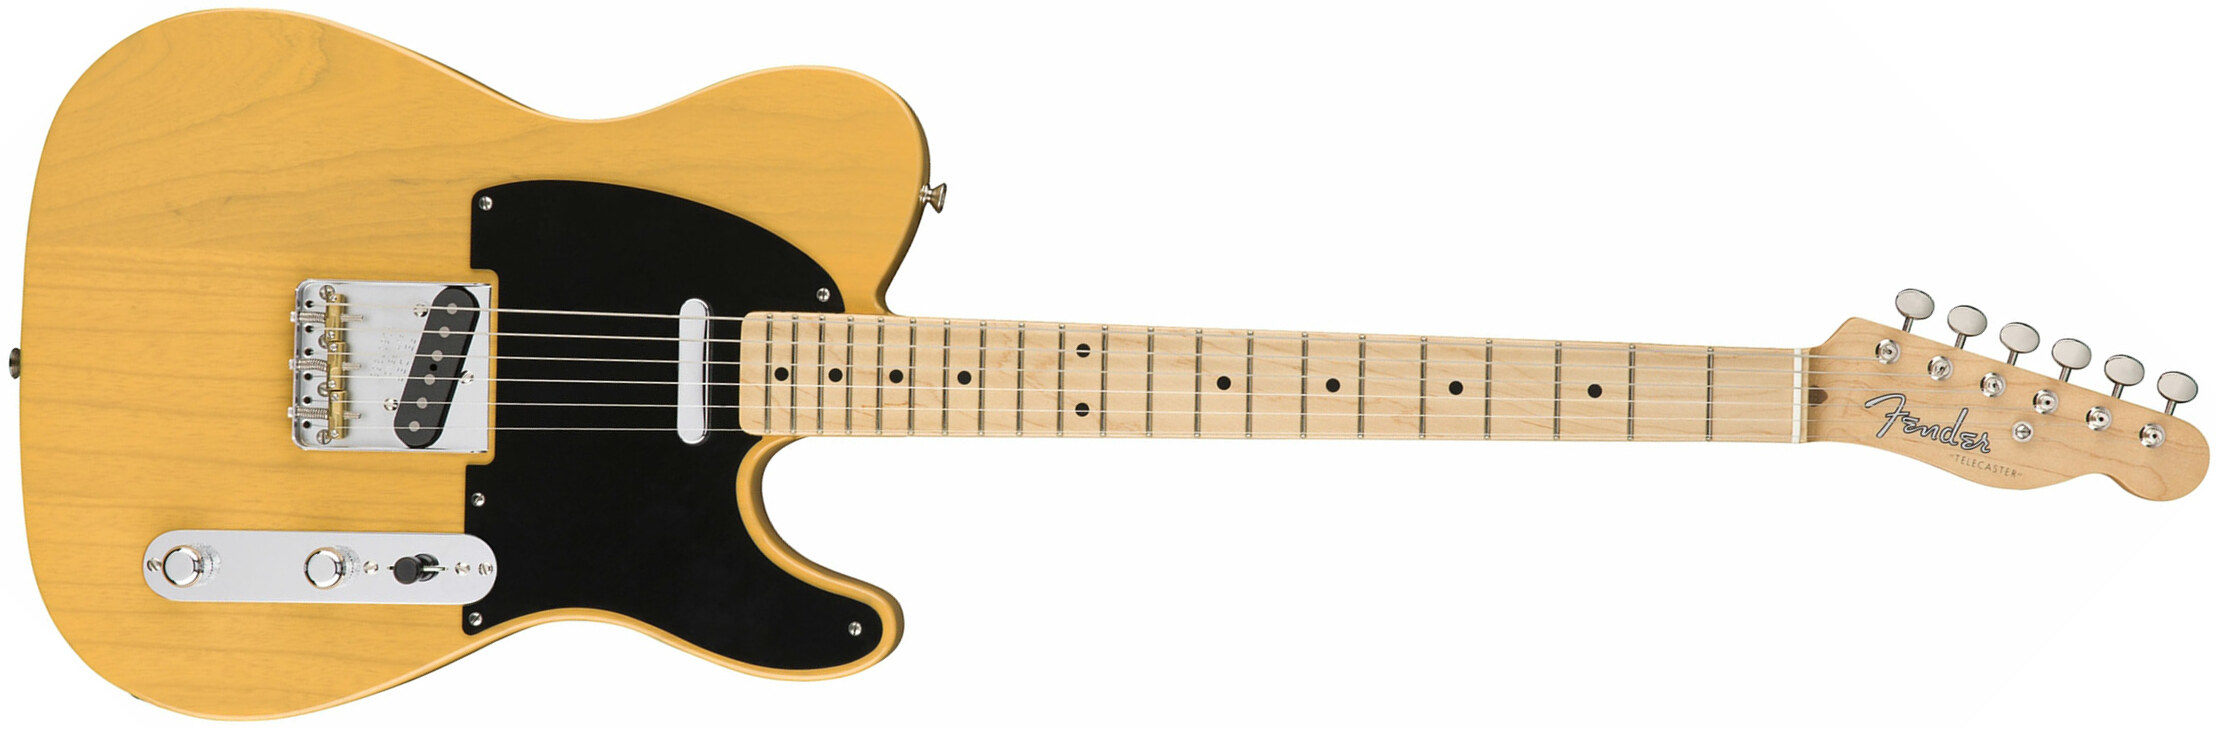 Fender Tele '50s American Original Usa Mn - Butterscotch Blonde - Guitarra eléctrica con forma de tel - Main picture